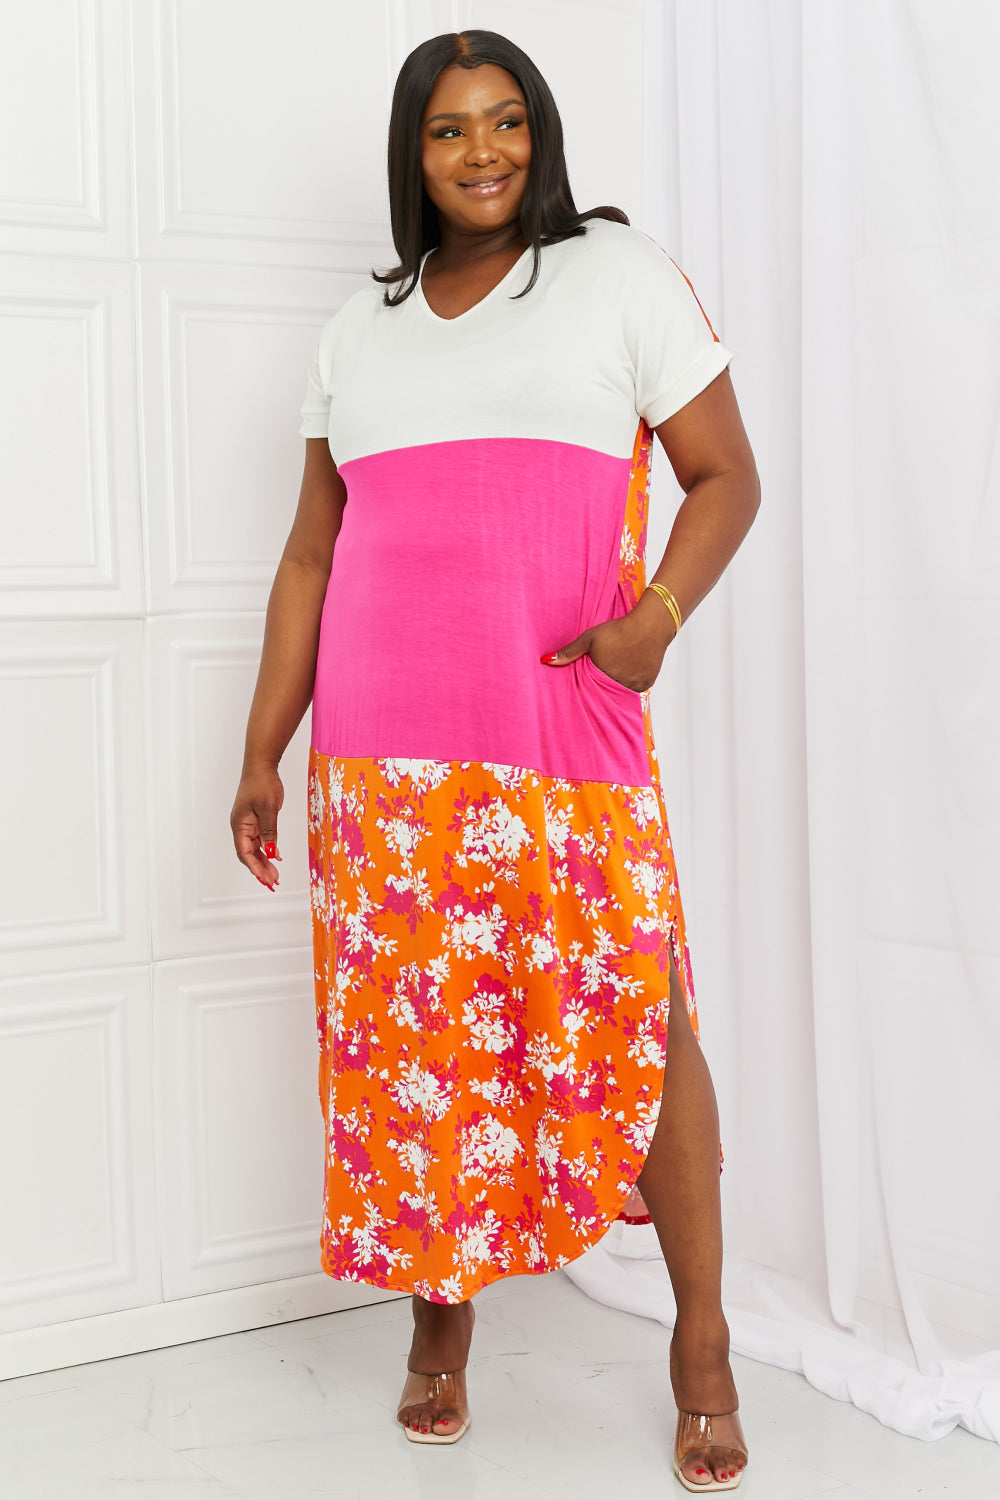 Celeste Spring Forward Full Size Color Block Midi Dress in Ivory/Fuchsia